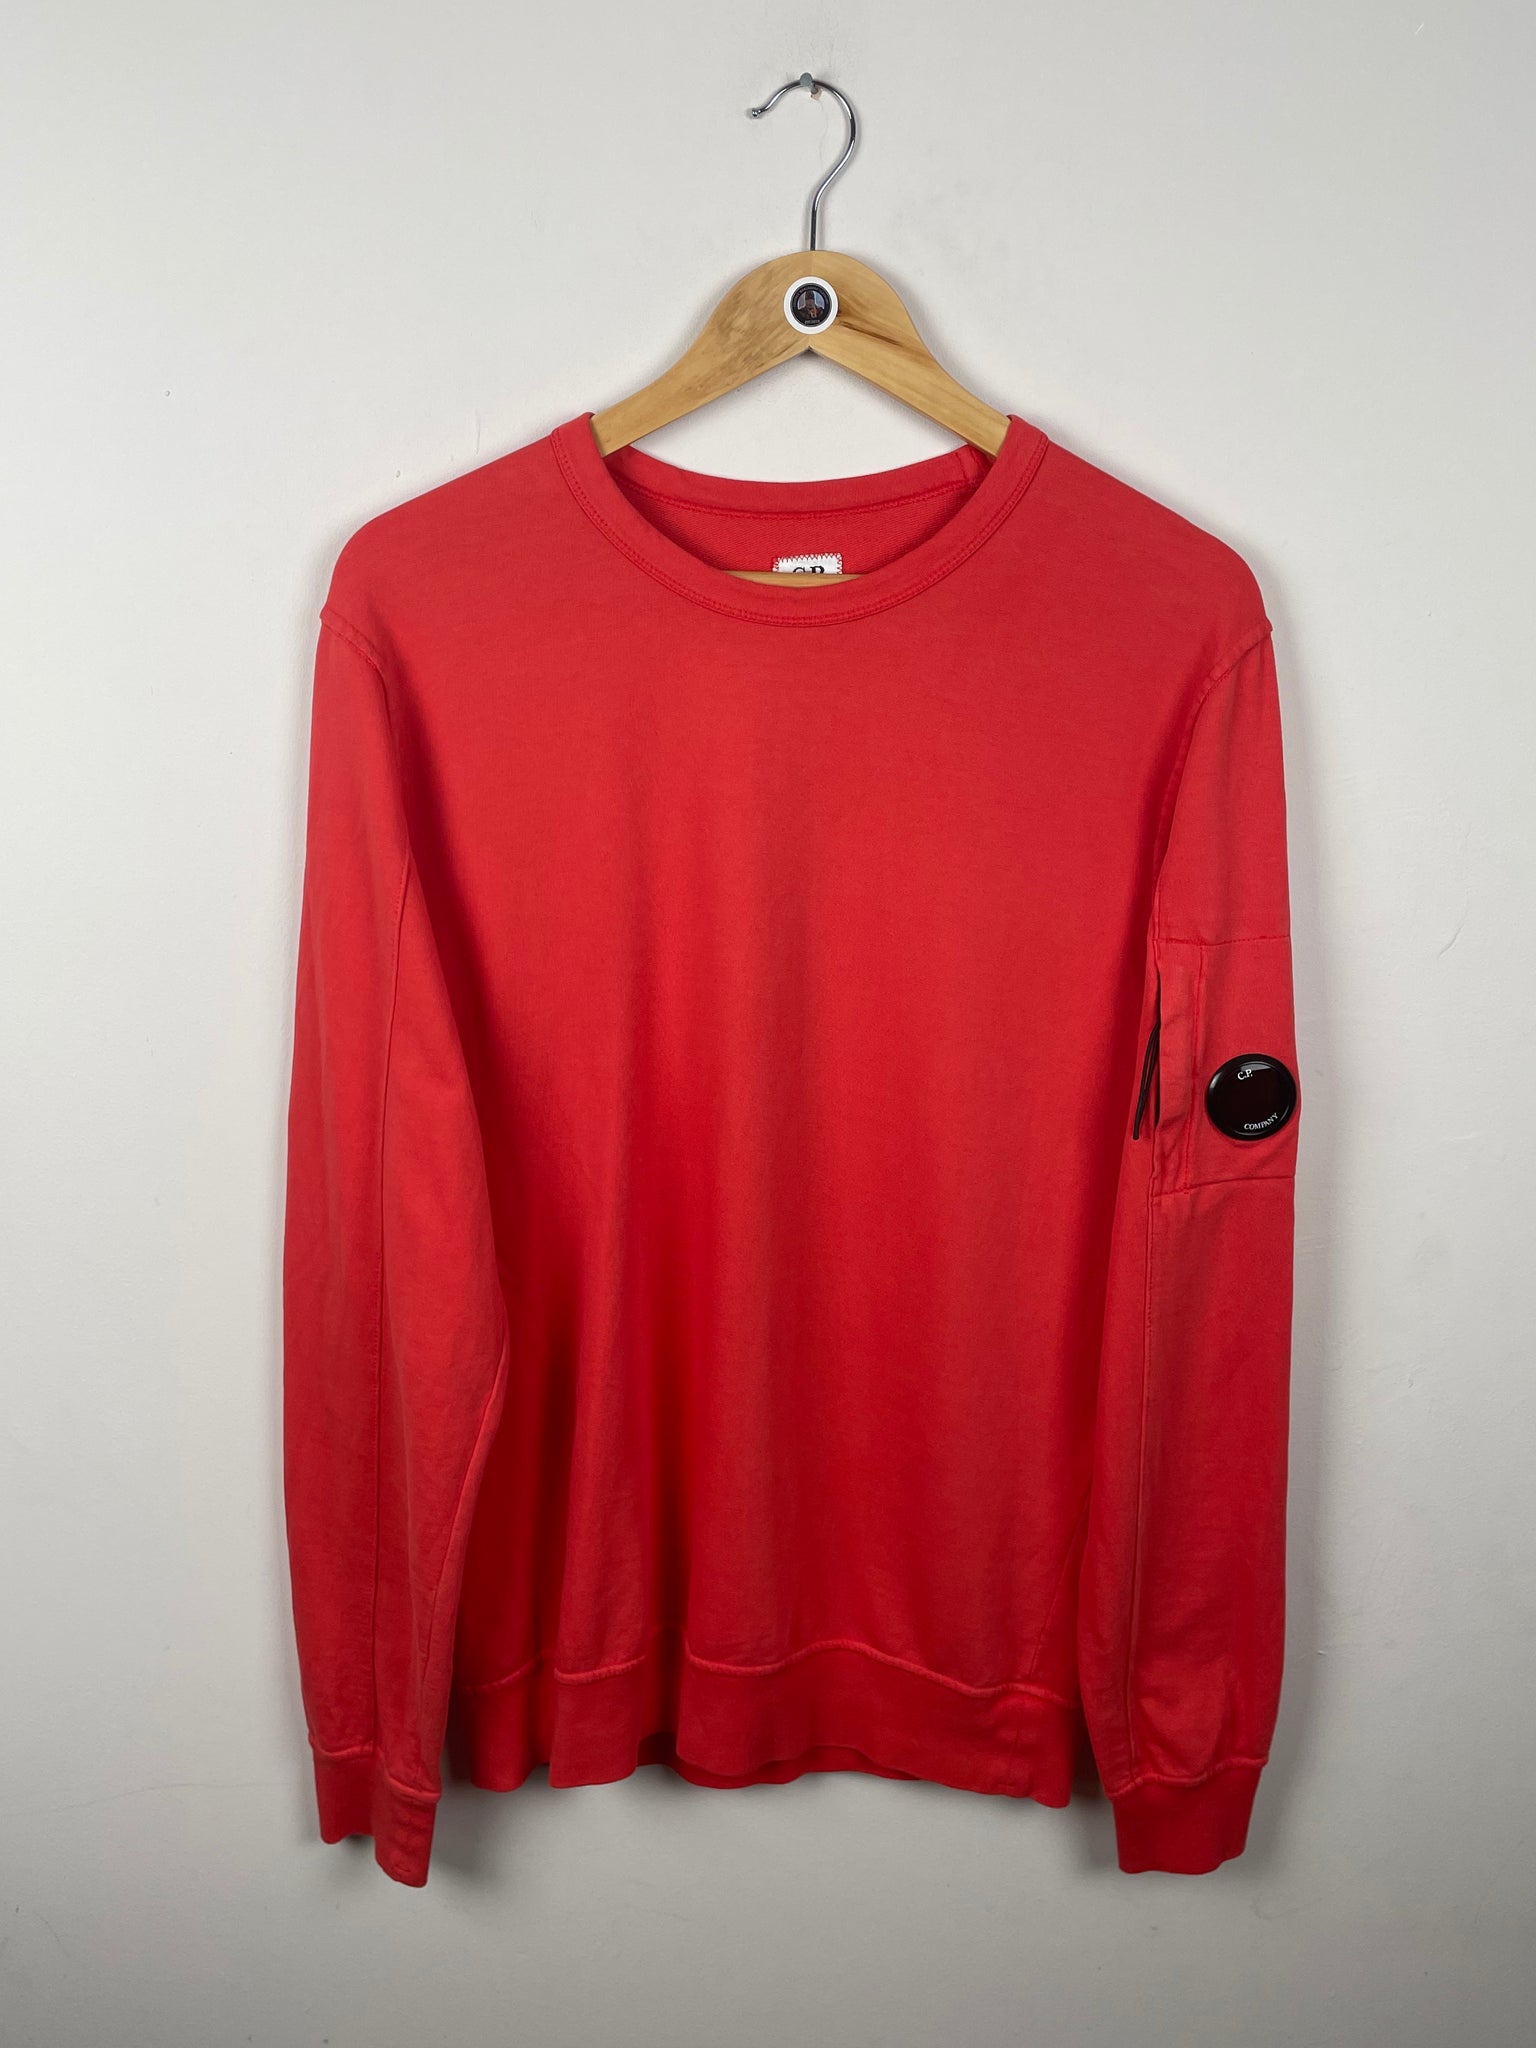 CP Company Sweatshirt - Medium